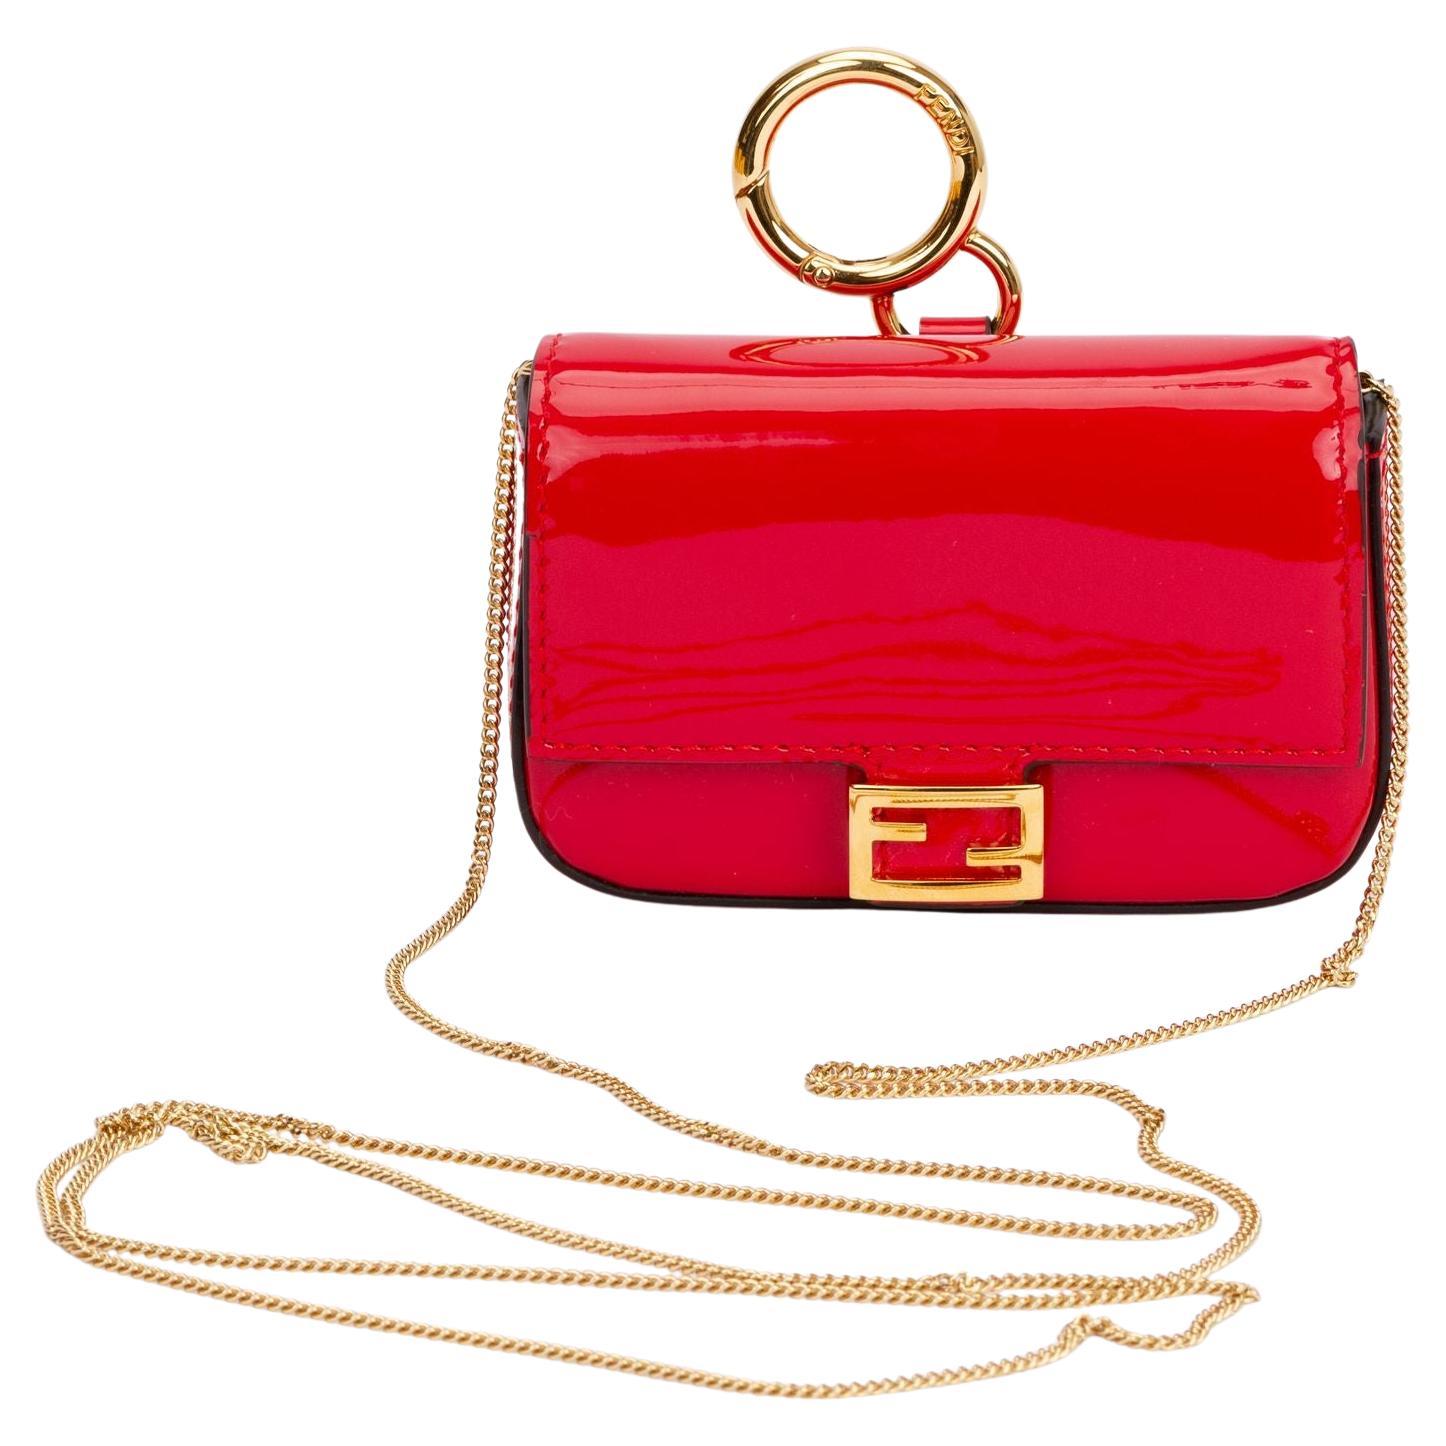 Fendi Red Leather Bag Store - www.edoc.com.vn 1694763468